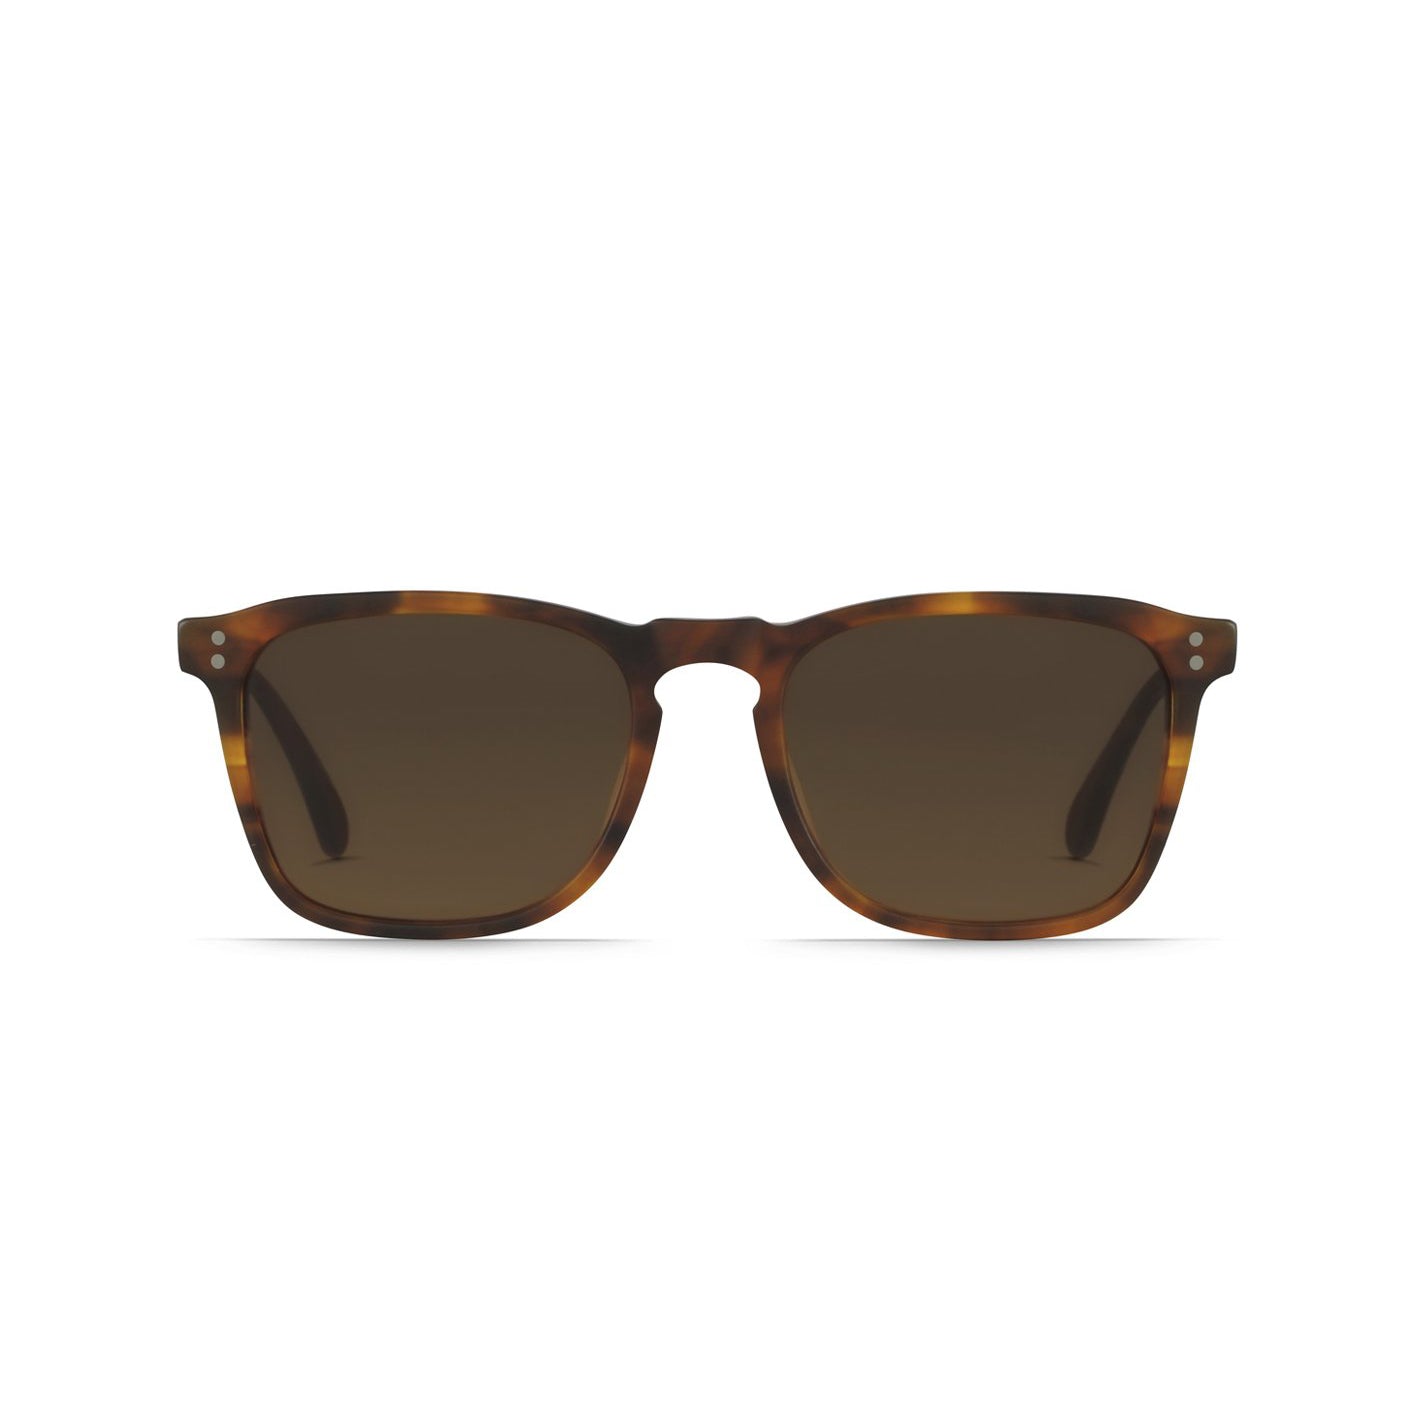 RAEN Wiley | Progressive Prescription Sunglasses | Matte Rootbeer